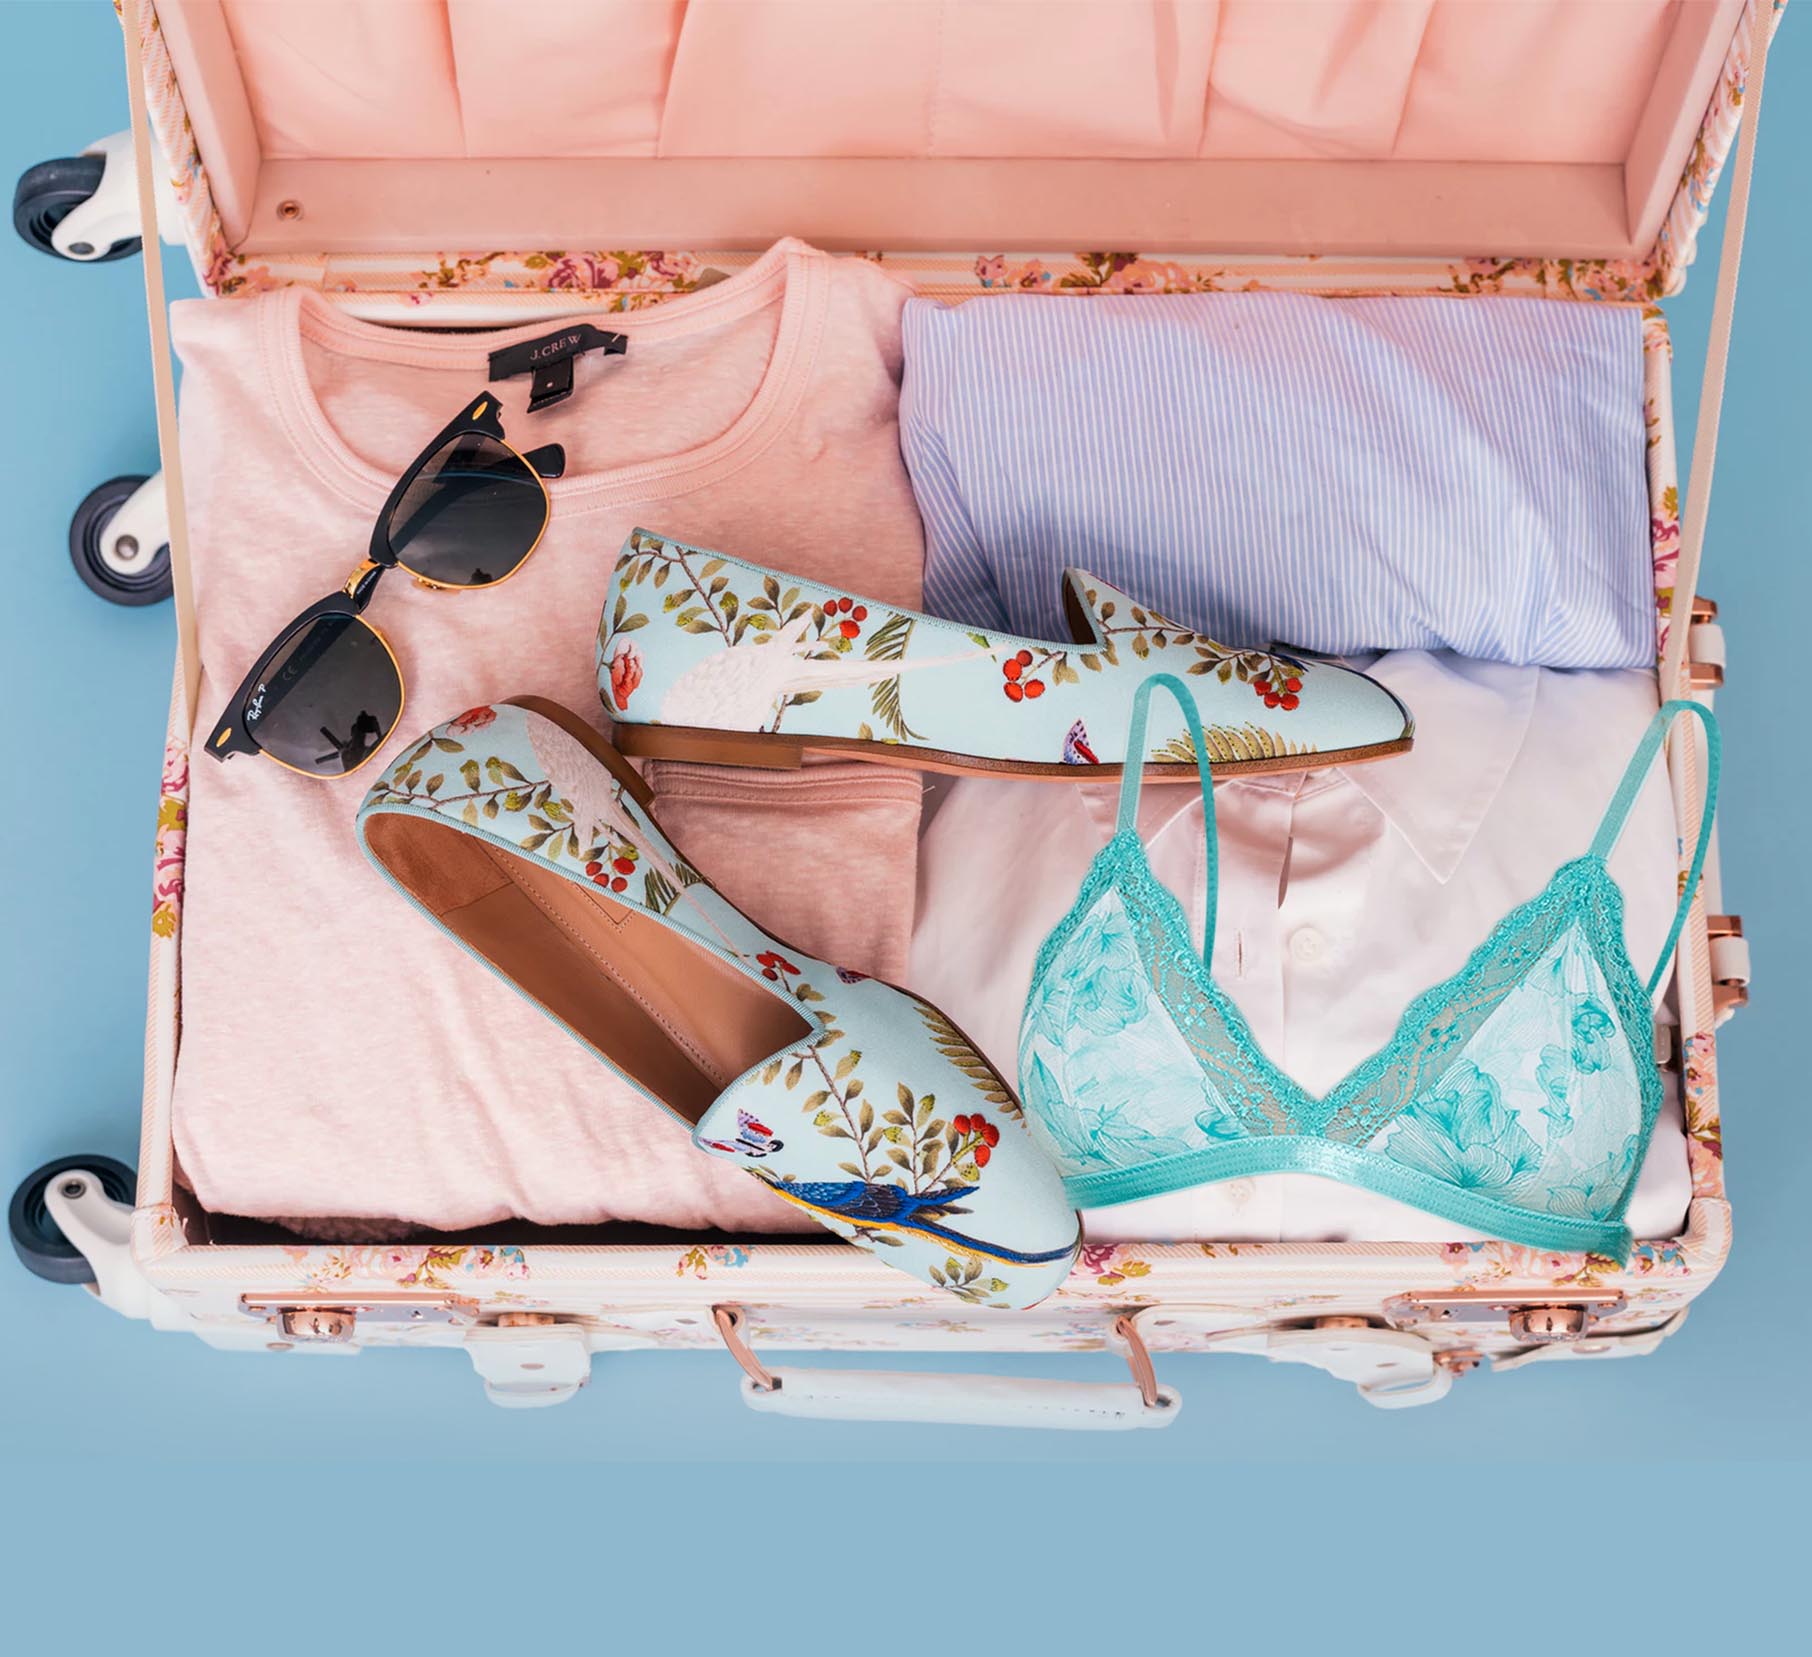 How to Pack Bras for Travel - Travel Bra Bag